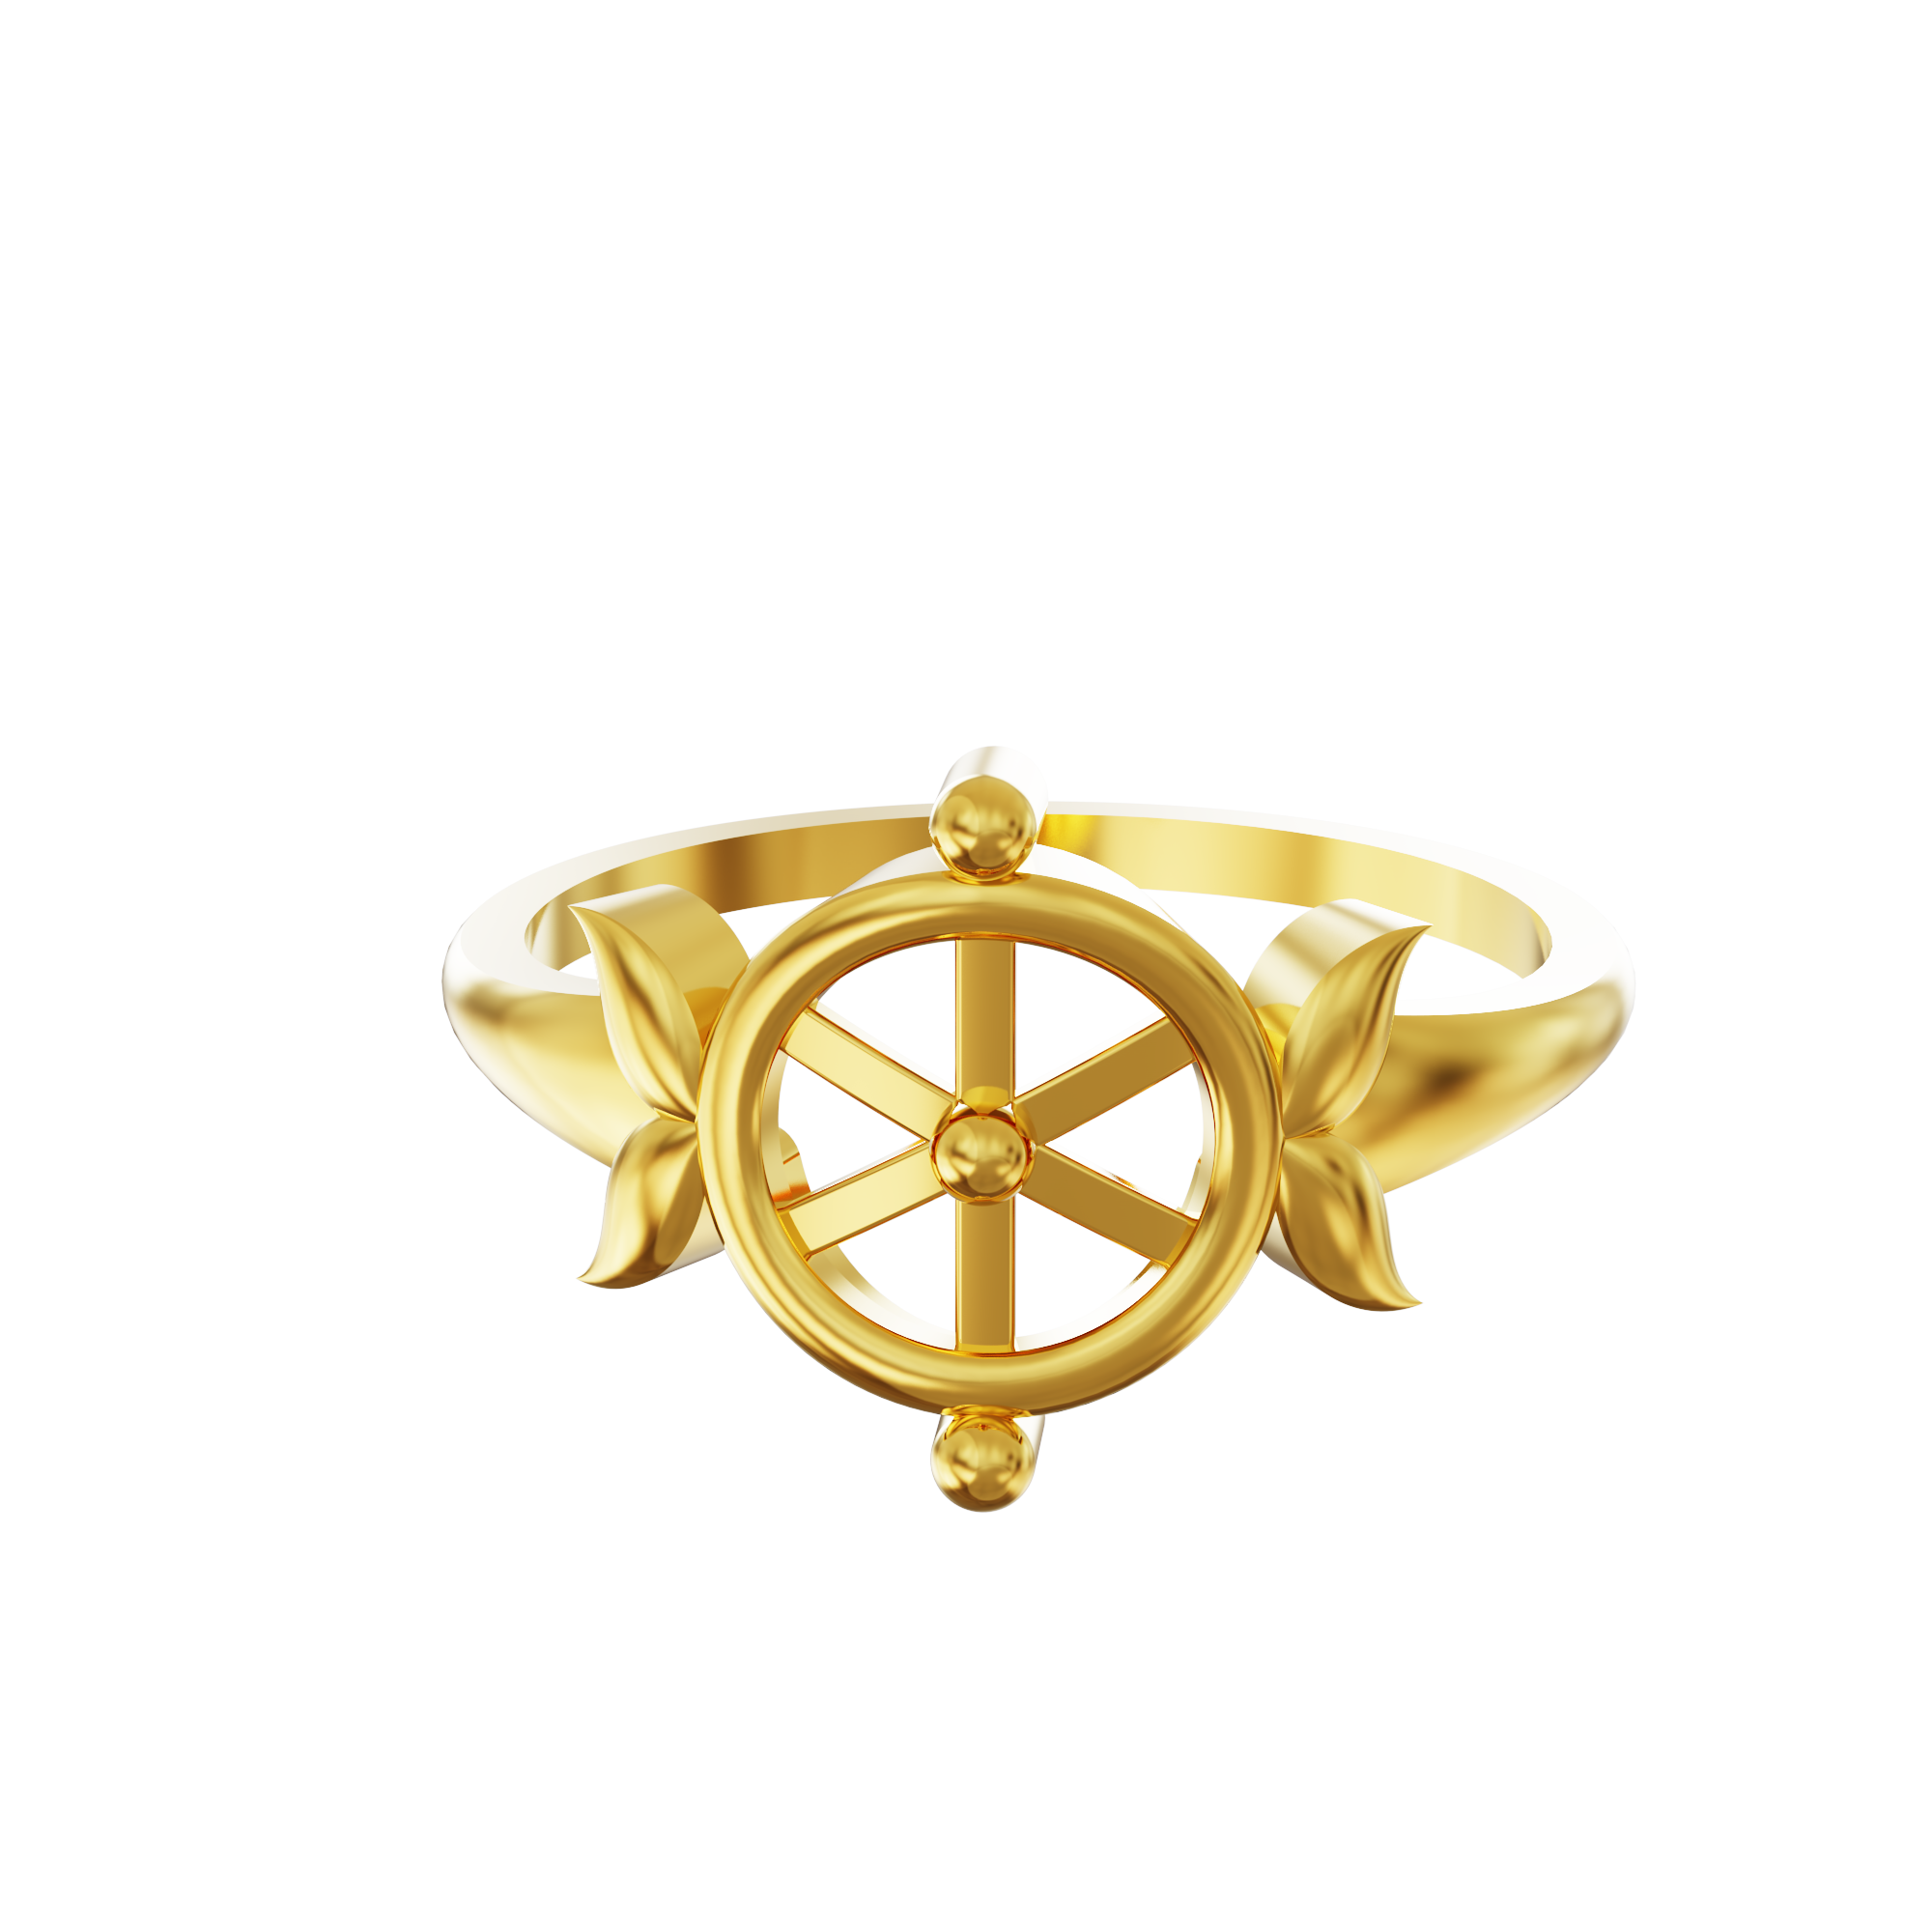 Circular-Design-Gold-Ring Collections